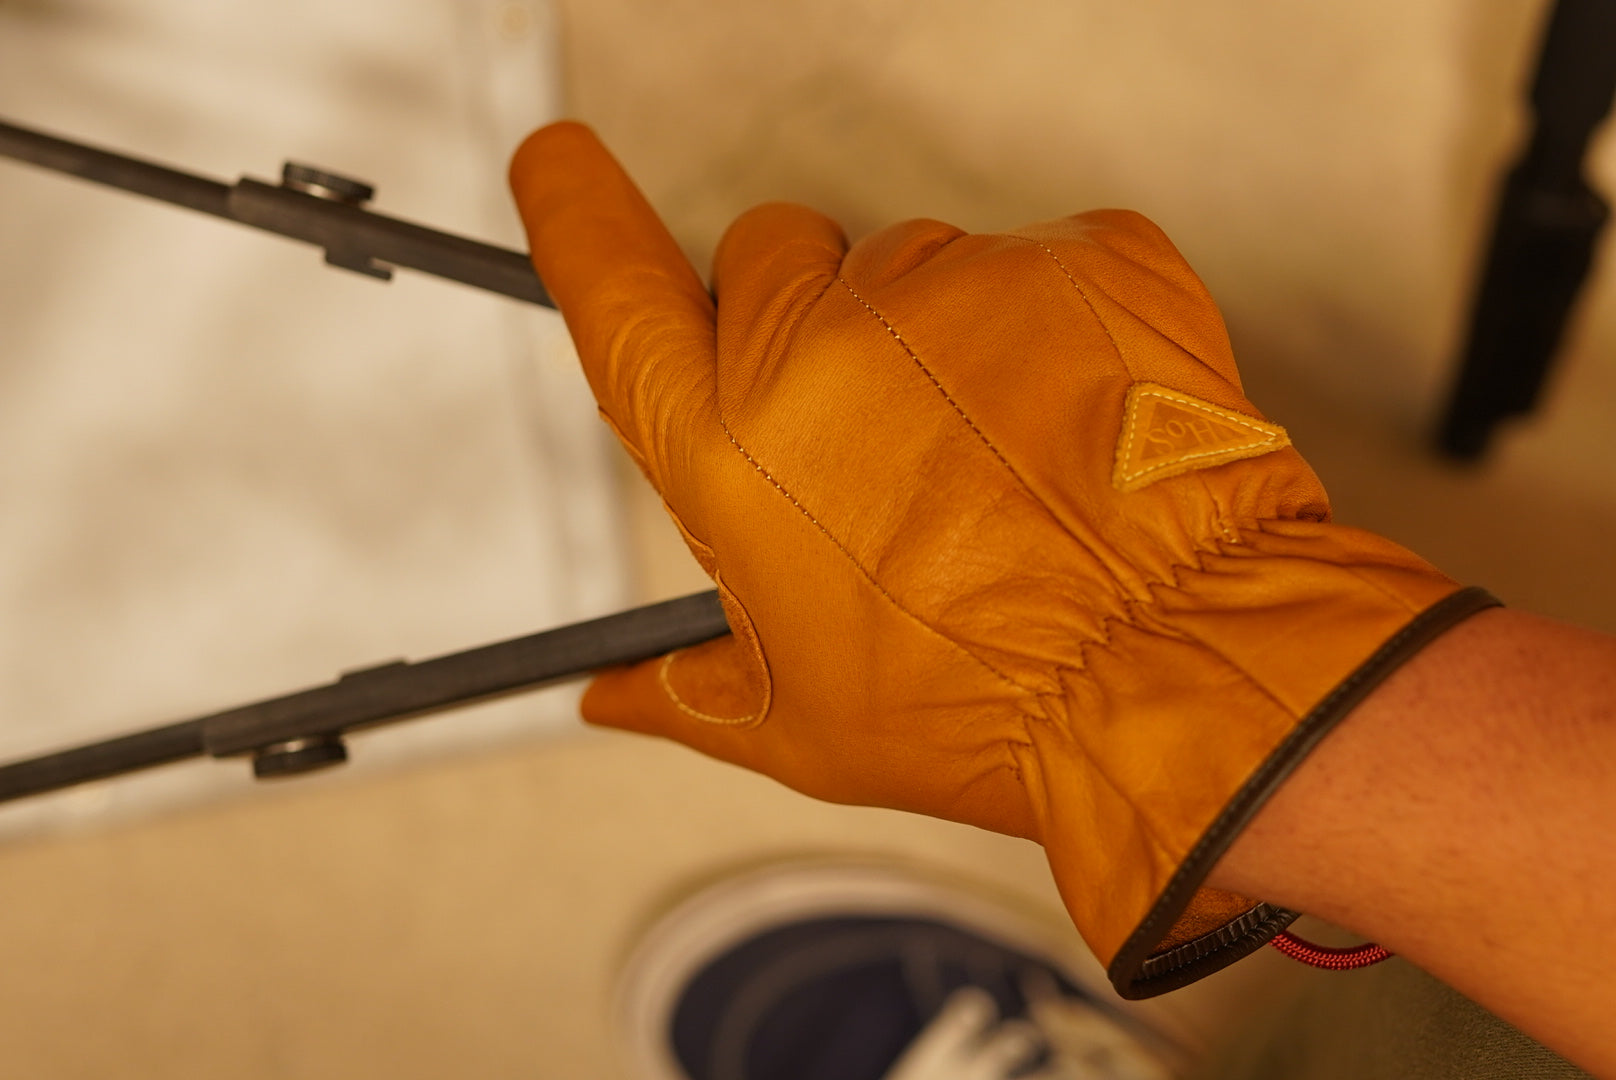 Daiko Products SOH/UPI Leather Gloves